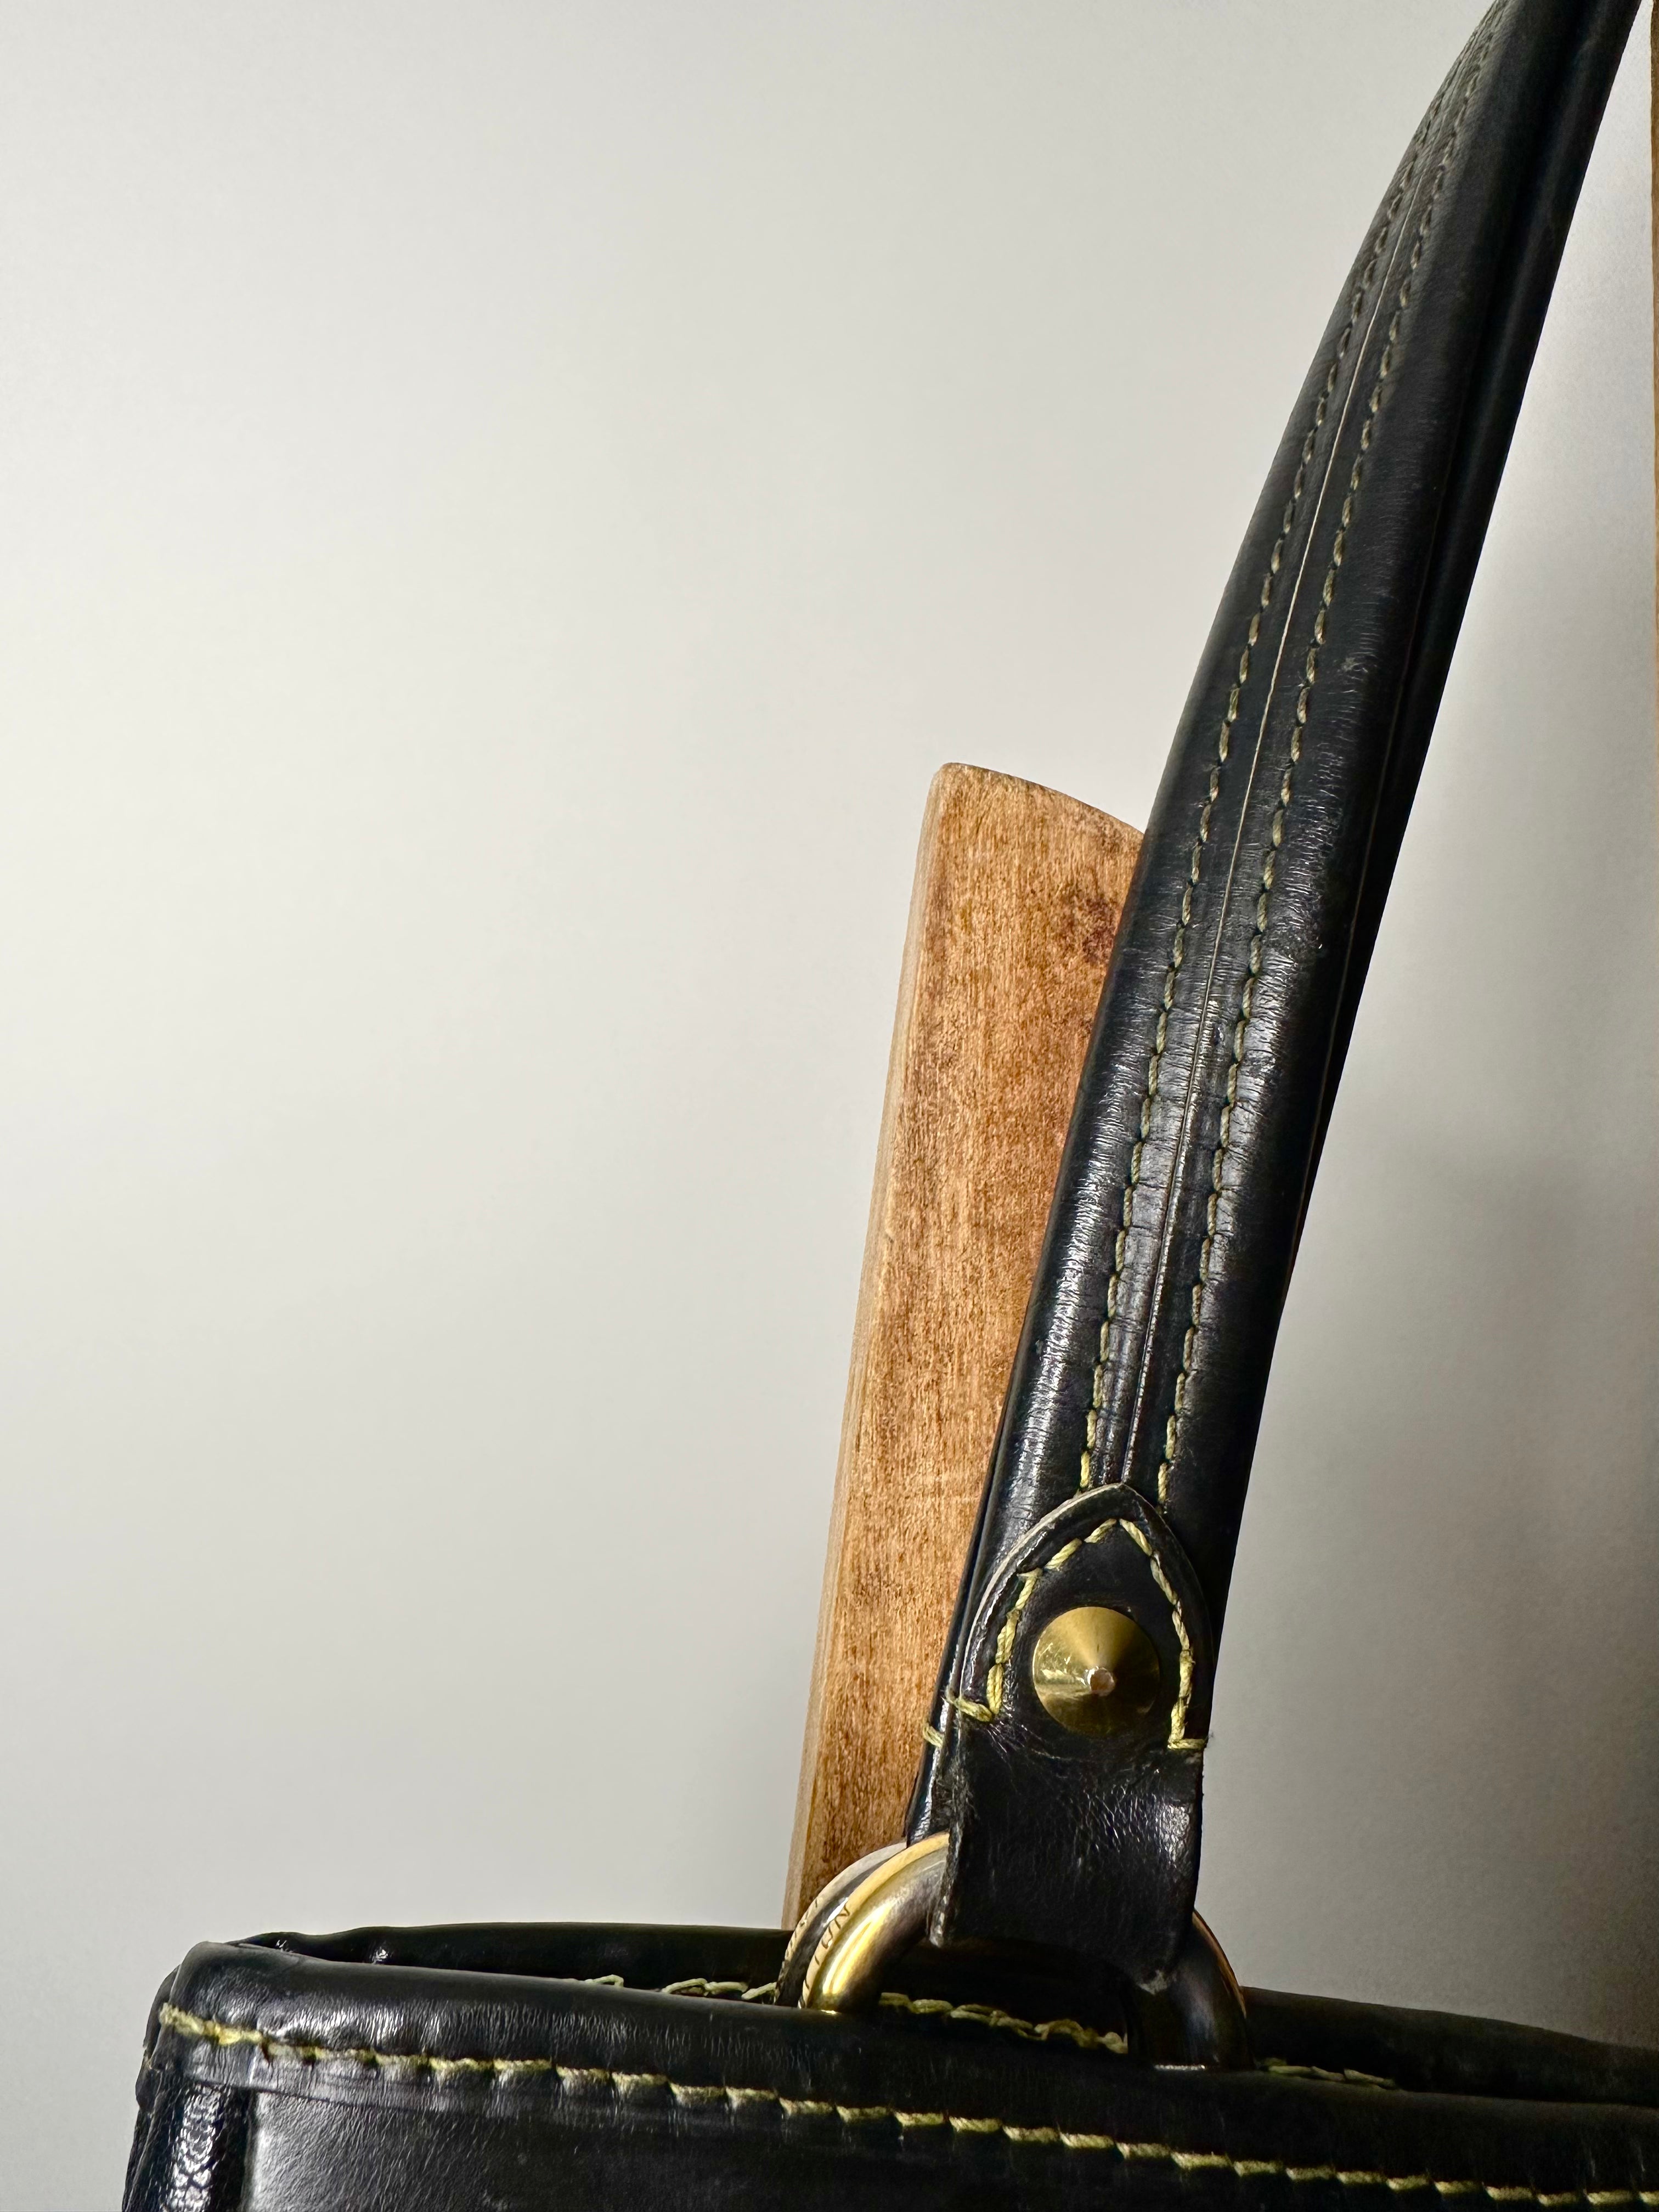 Louis Vuitton // Handbag / Gold Hardware / Restored / Yellow Thread